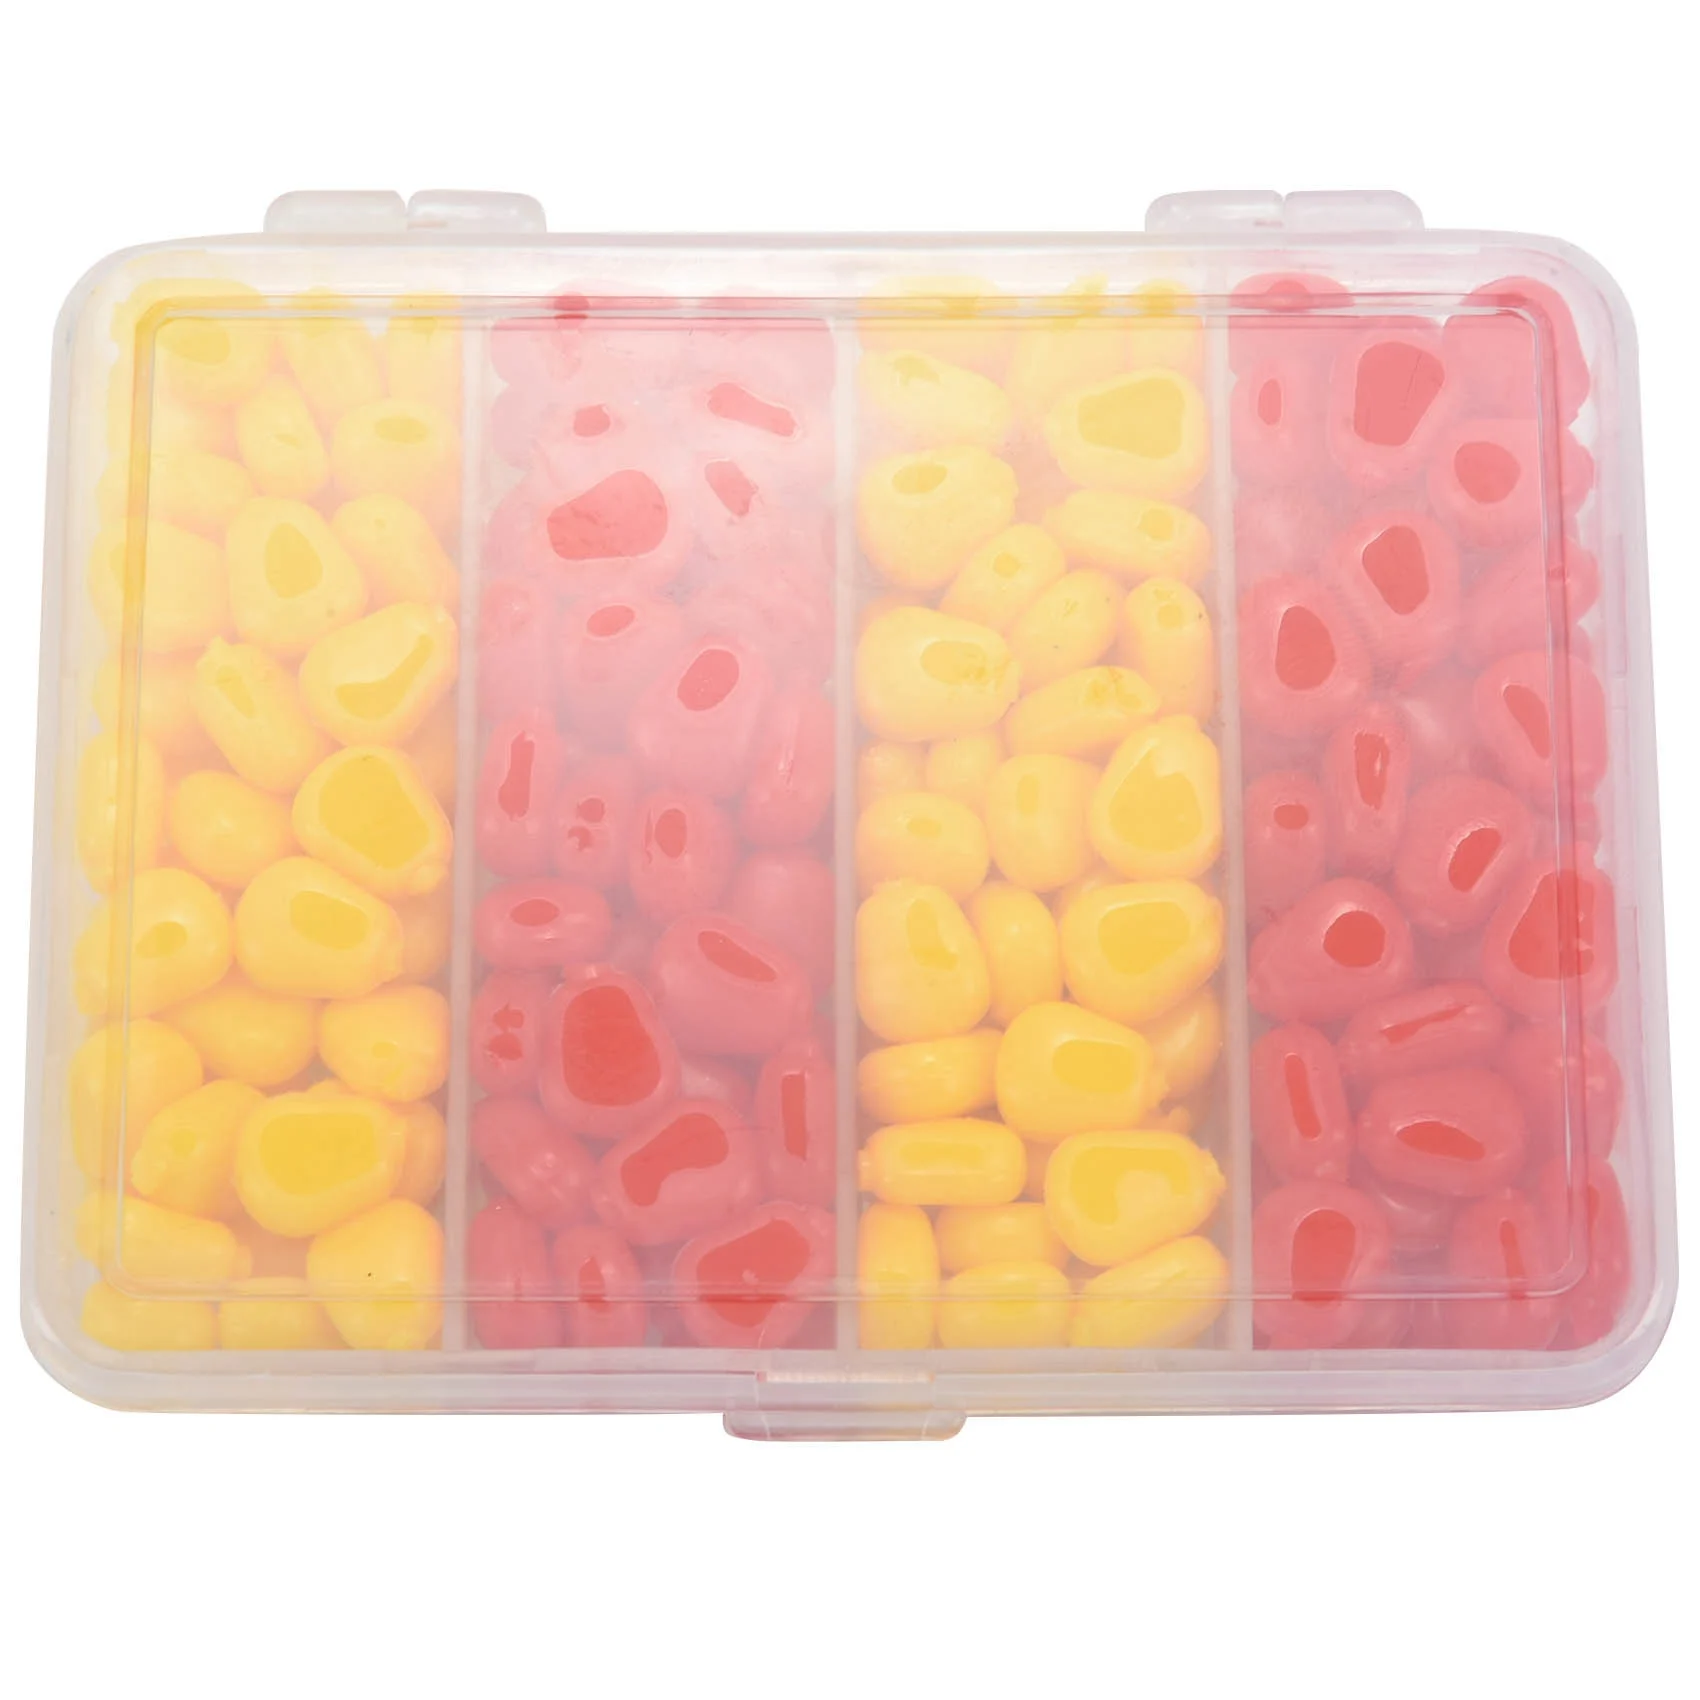 

200pcs/Lot Soft Carp Bait Fishing Lure Set Floating Corn Flavor Artificial Bait Yellow Red with Plastic Box